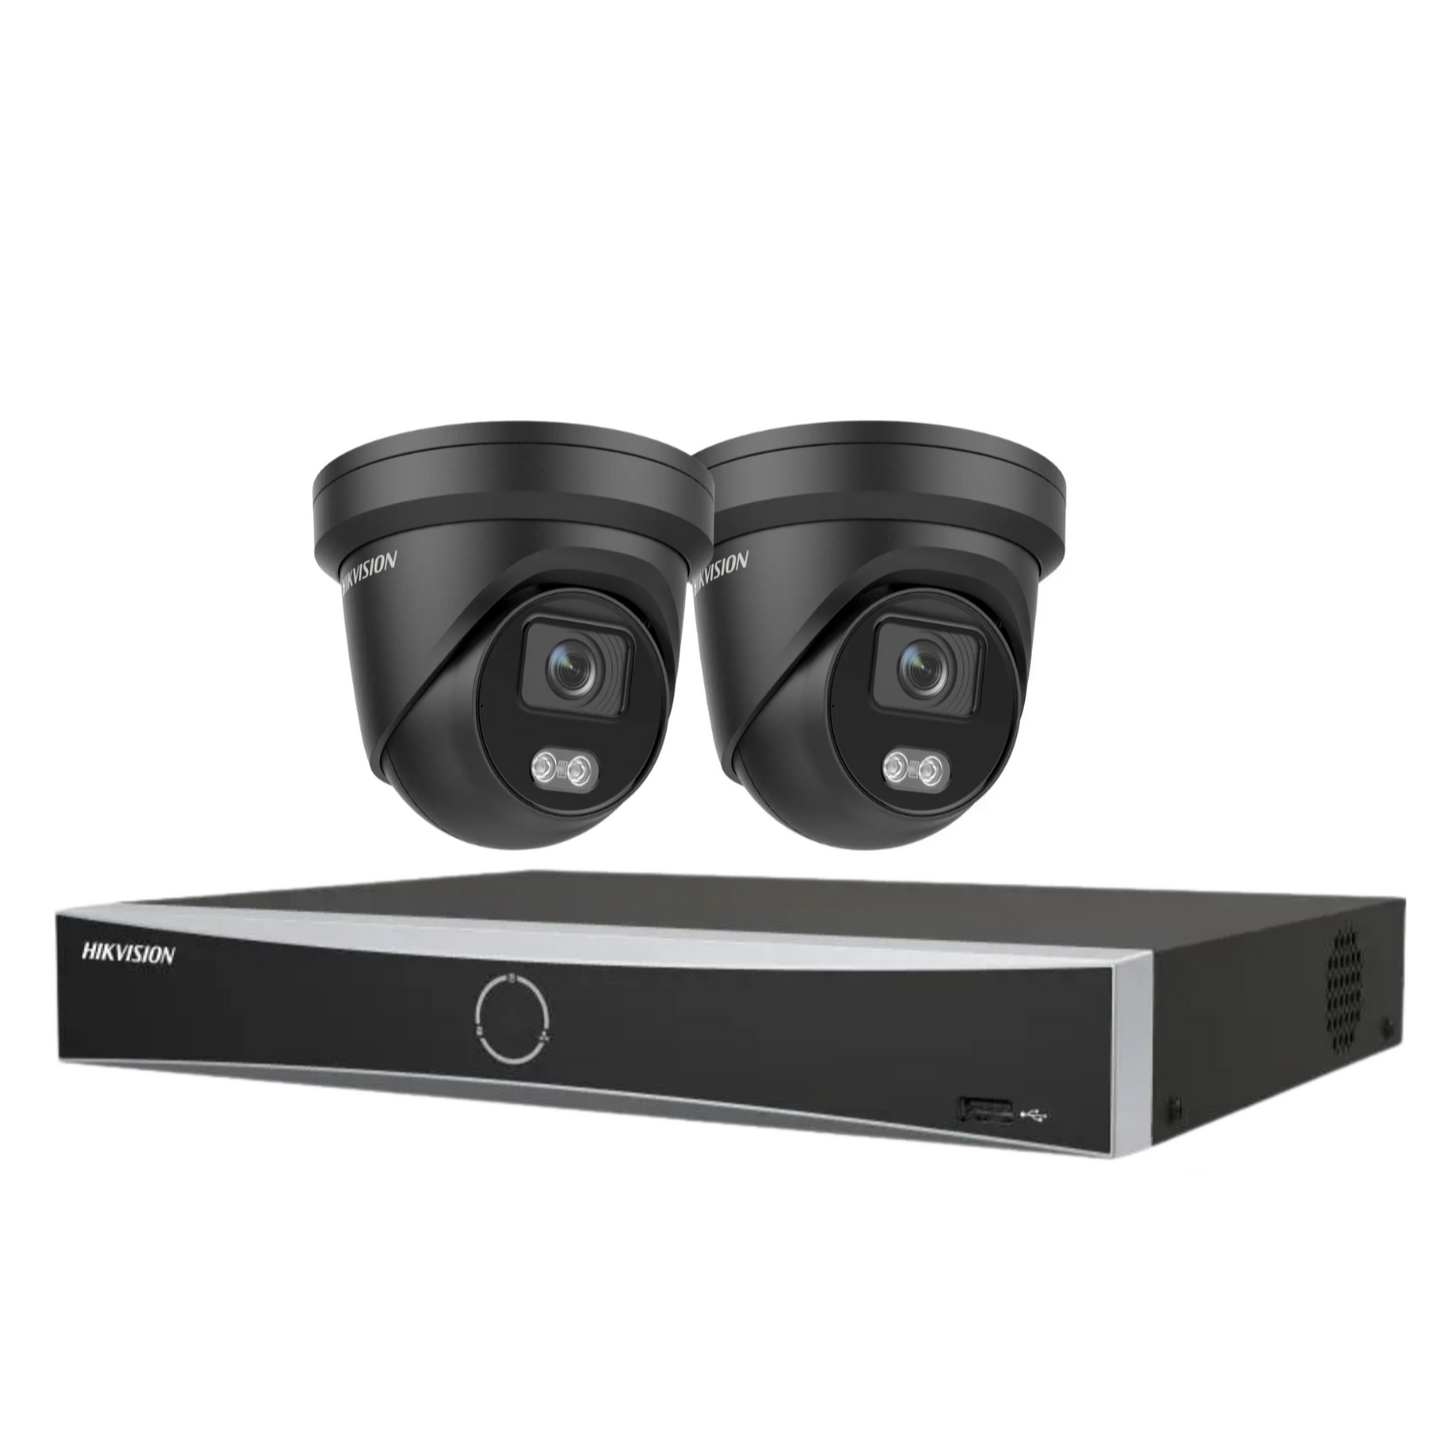 Hikvision CCTV kit, 2 x 4mp Smart Hybrid Colorvu IP Poe cameras with Audio, 1 x 4 Channel NVR